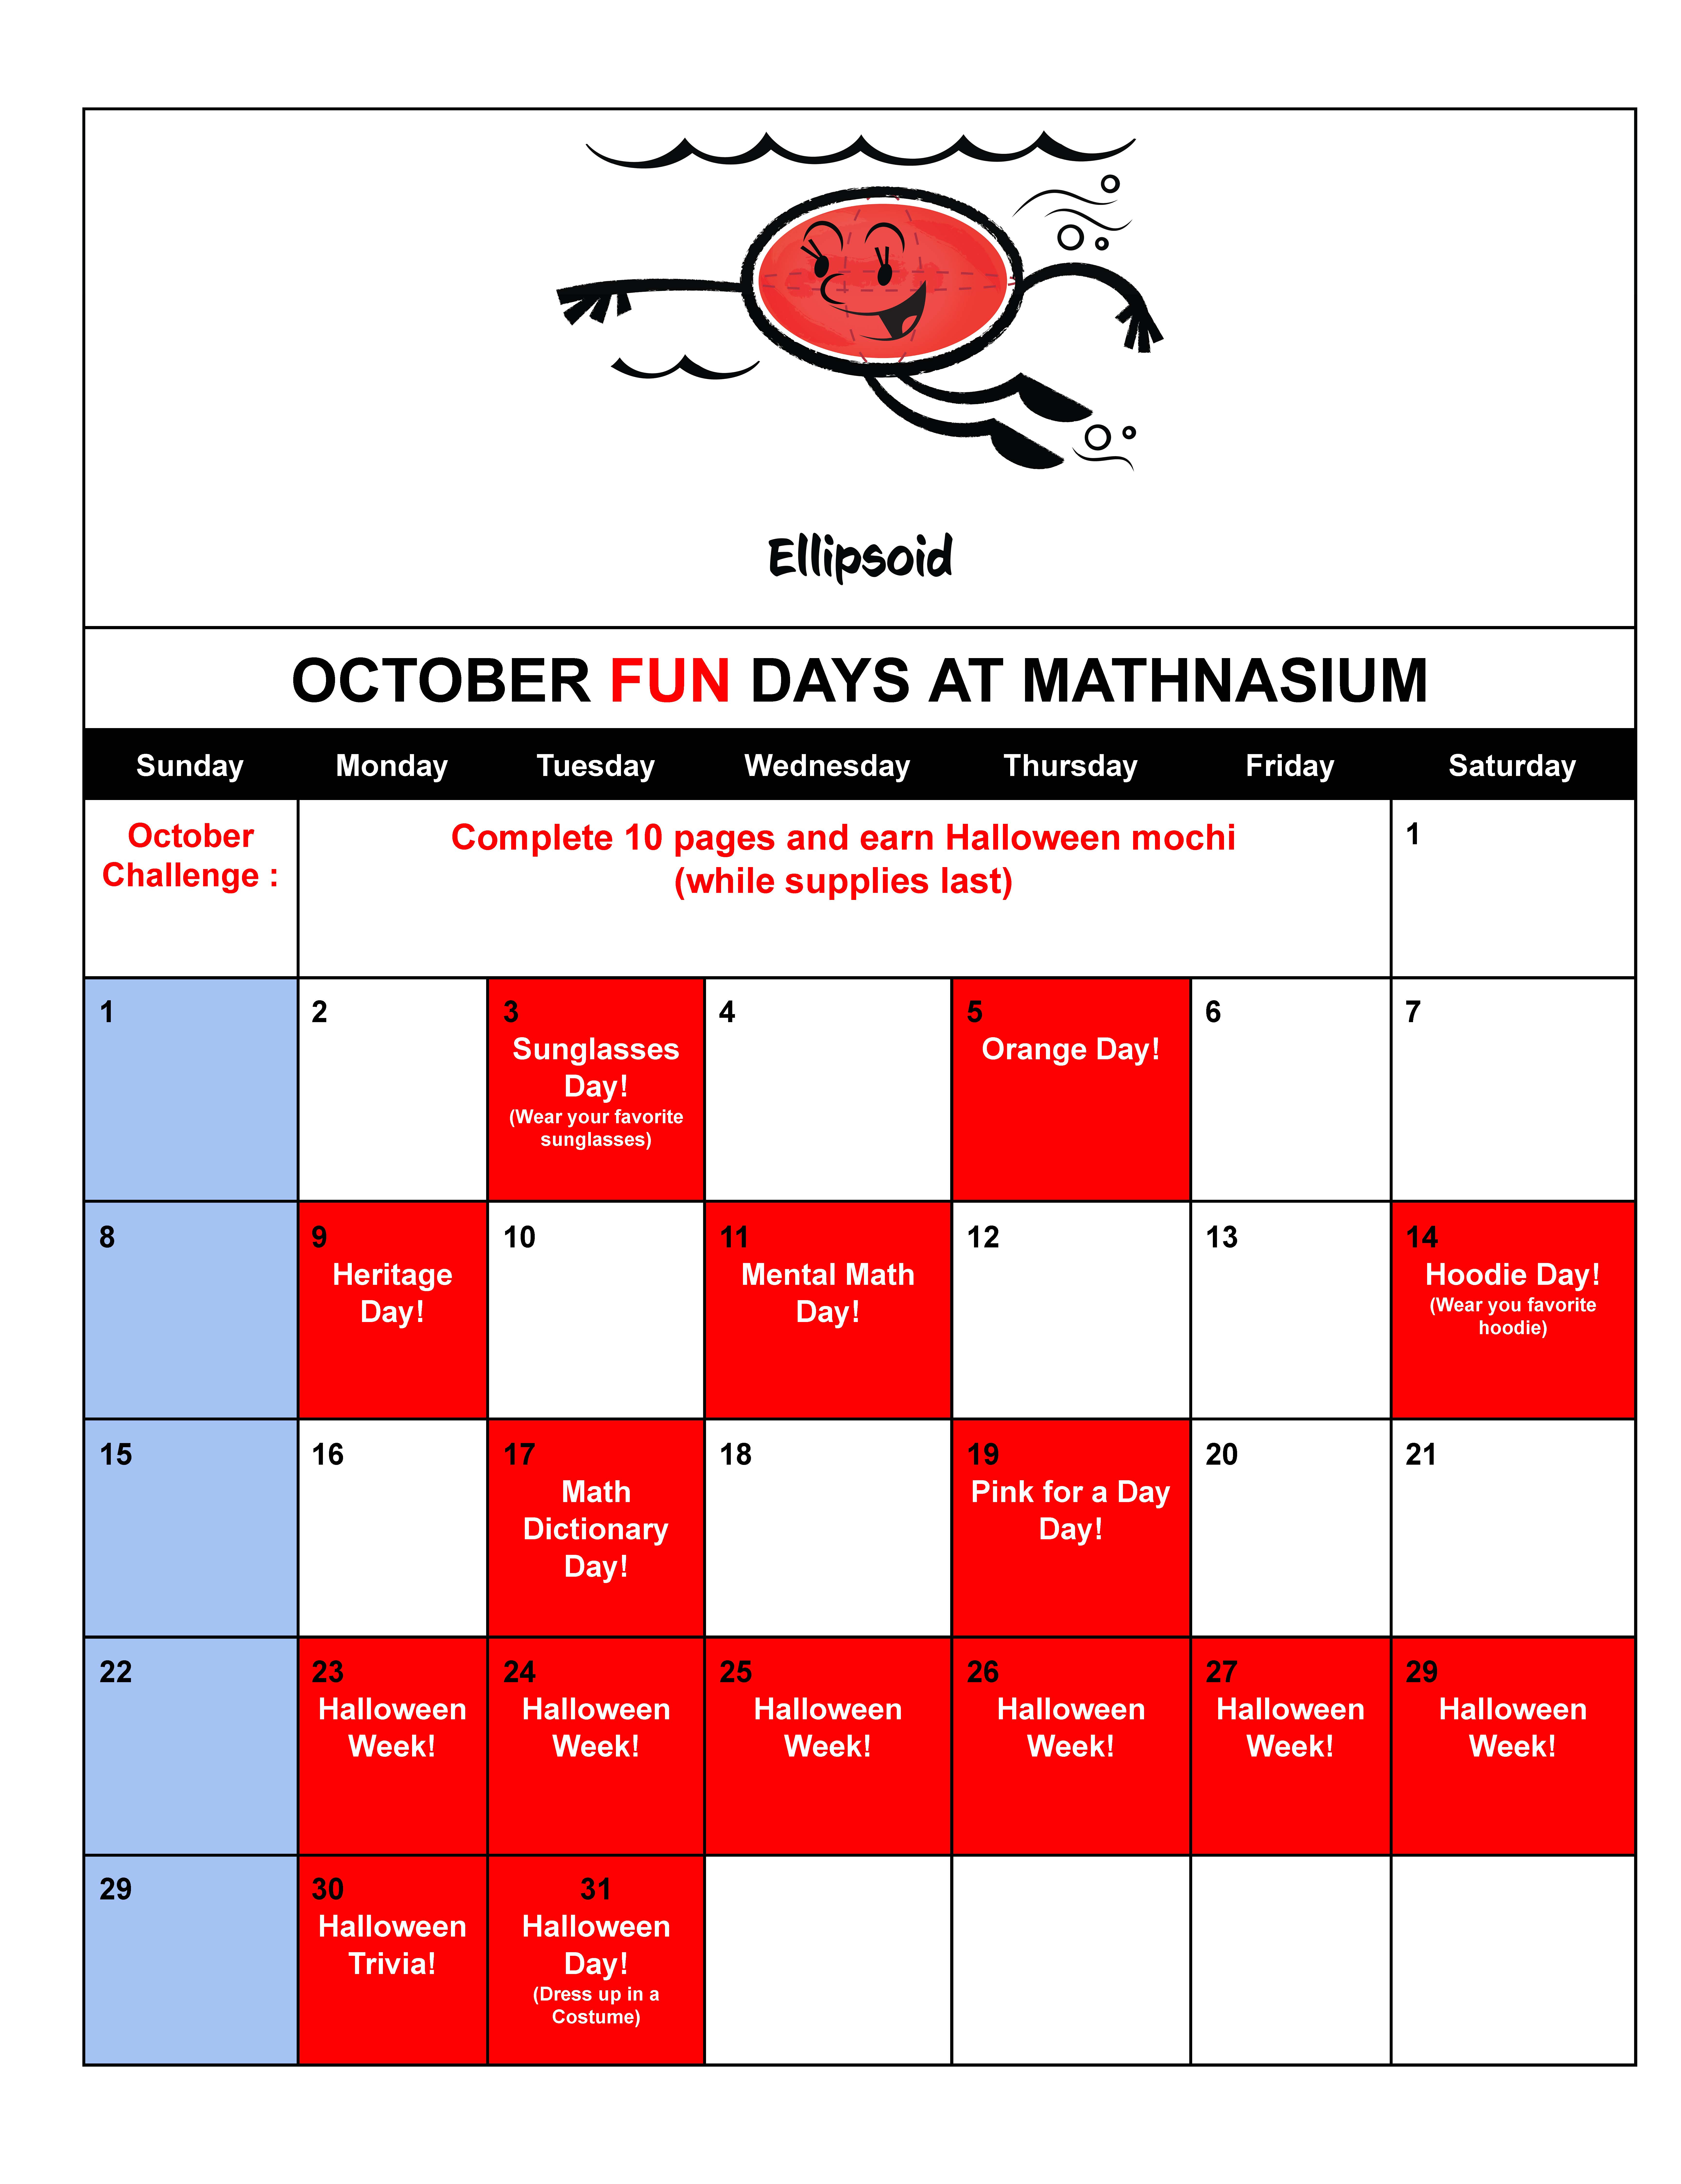 October 2023 Fun Calendar